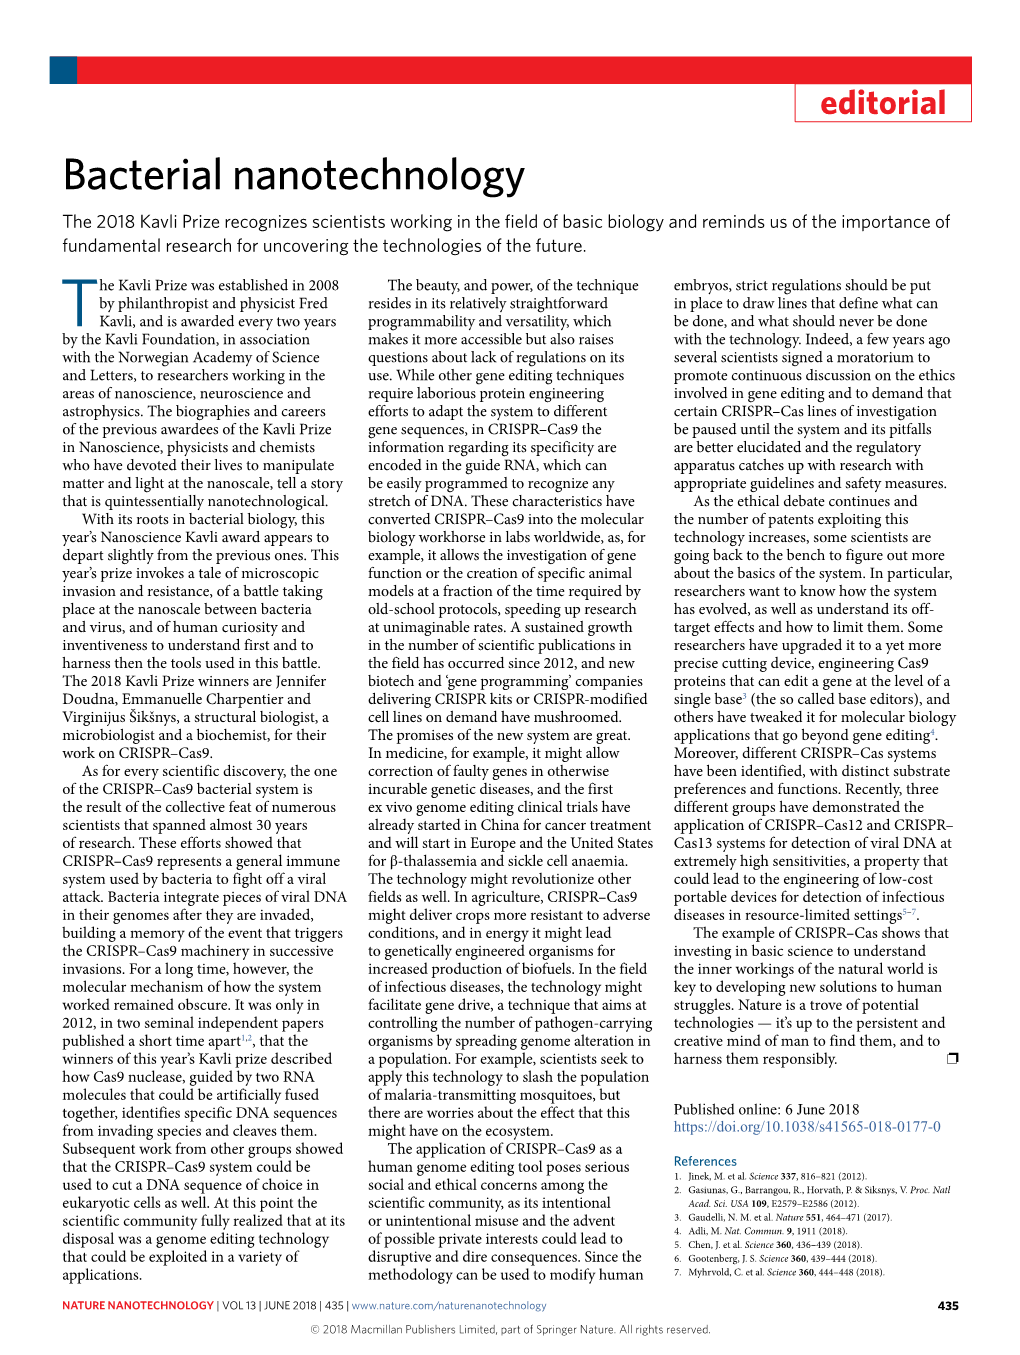 Bacterial Nanotechnology